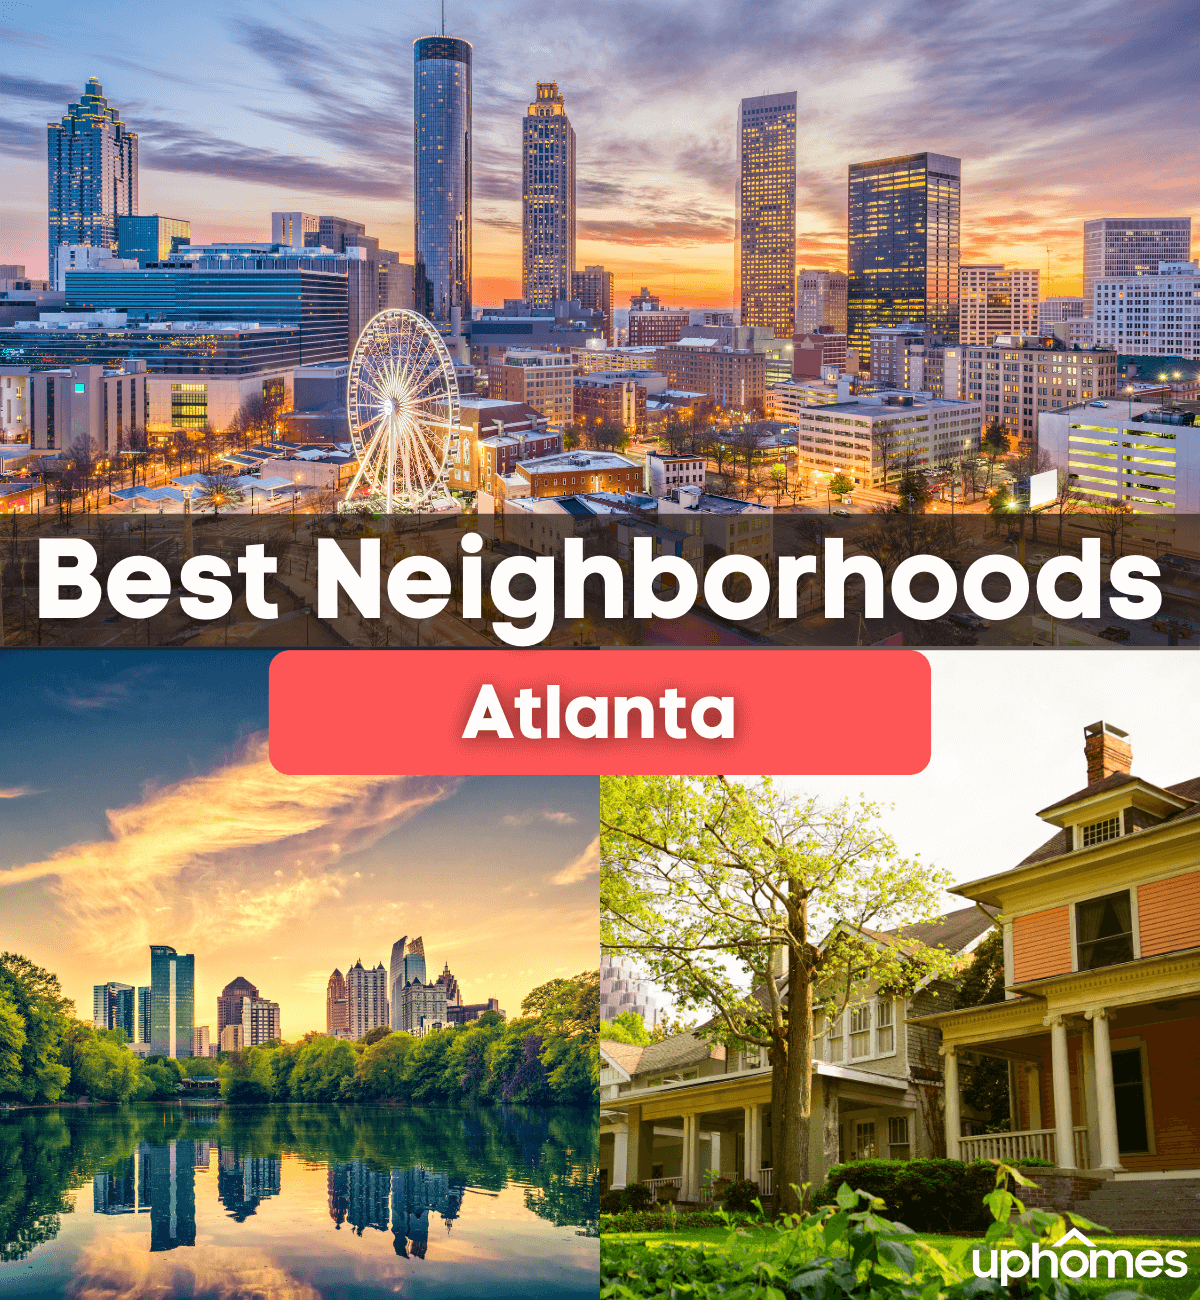 Best Neighborhoods in Atlanta, GA - Here are the Best Places to Live in Atlanta